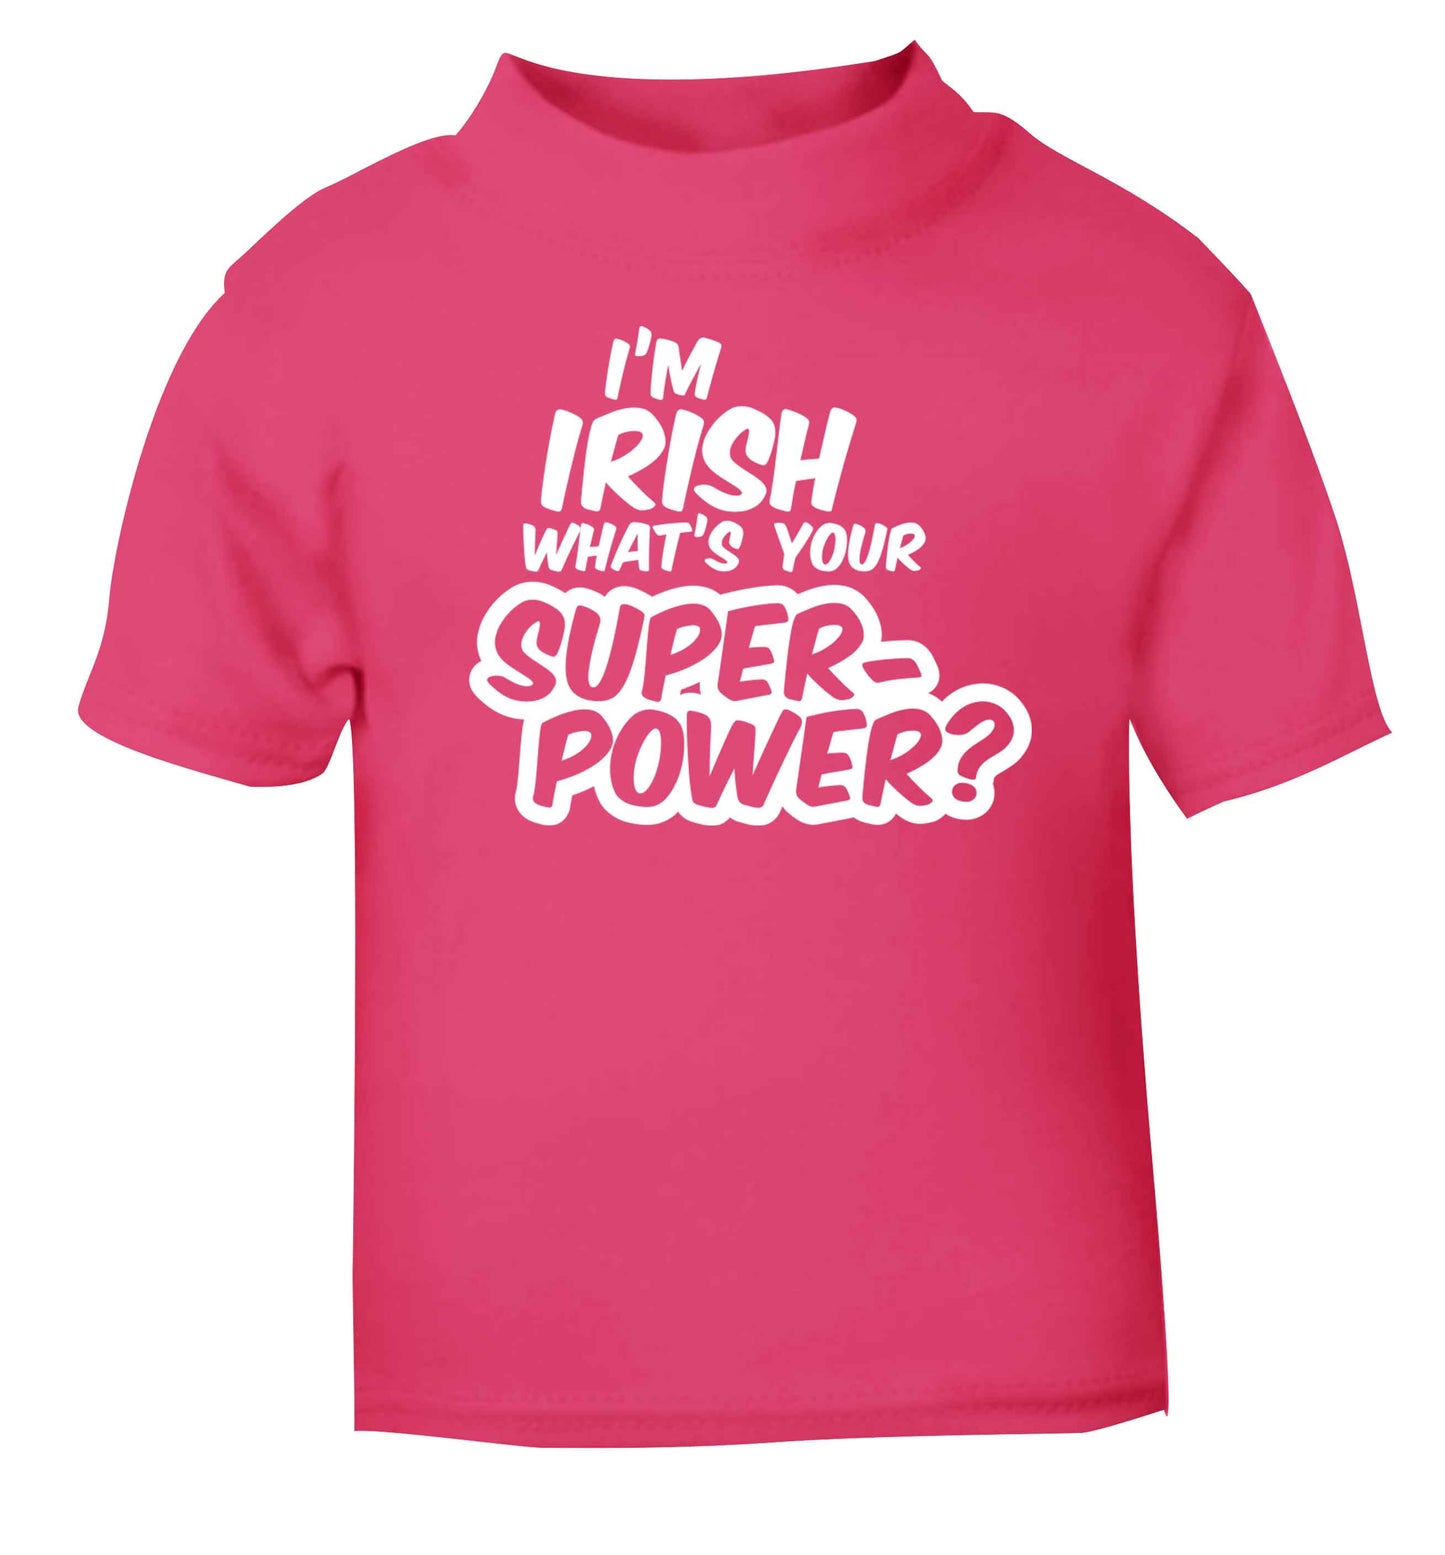 I'm Irish what's your superpower? pink baby toddler Tshirt 2 Years